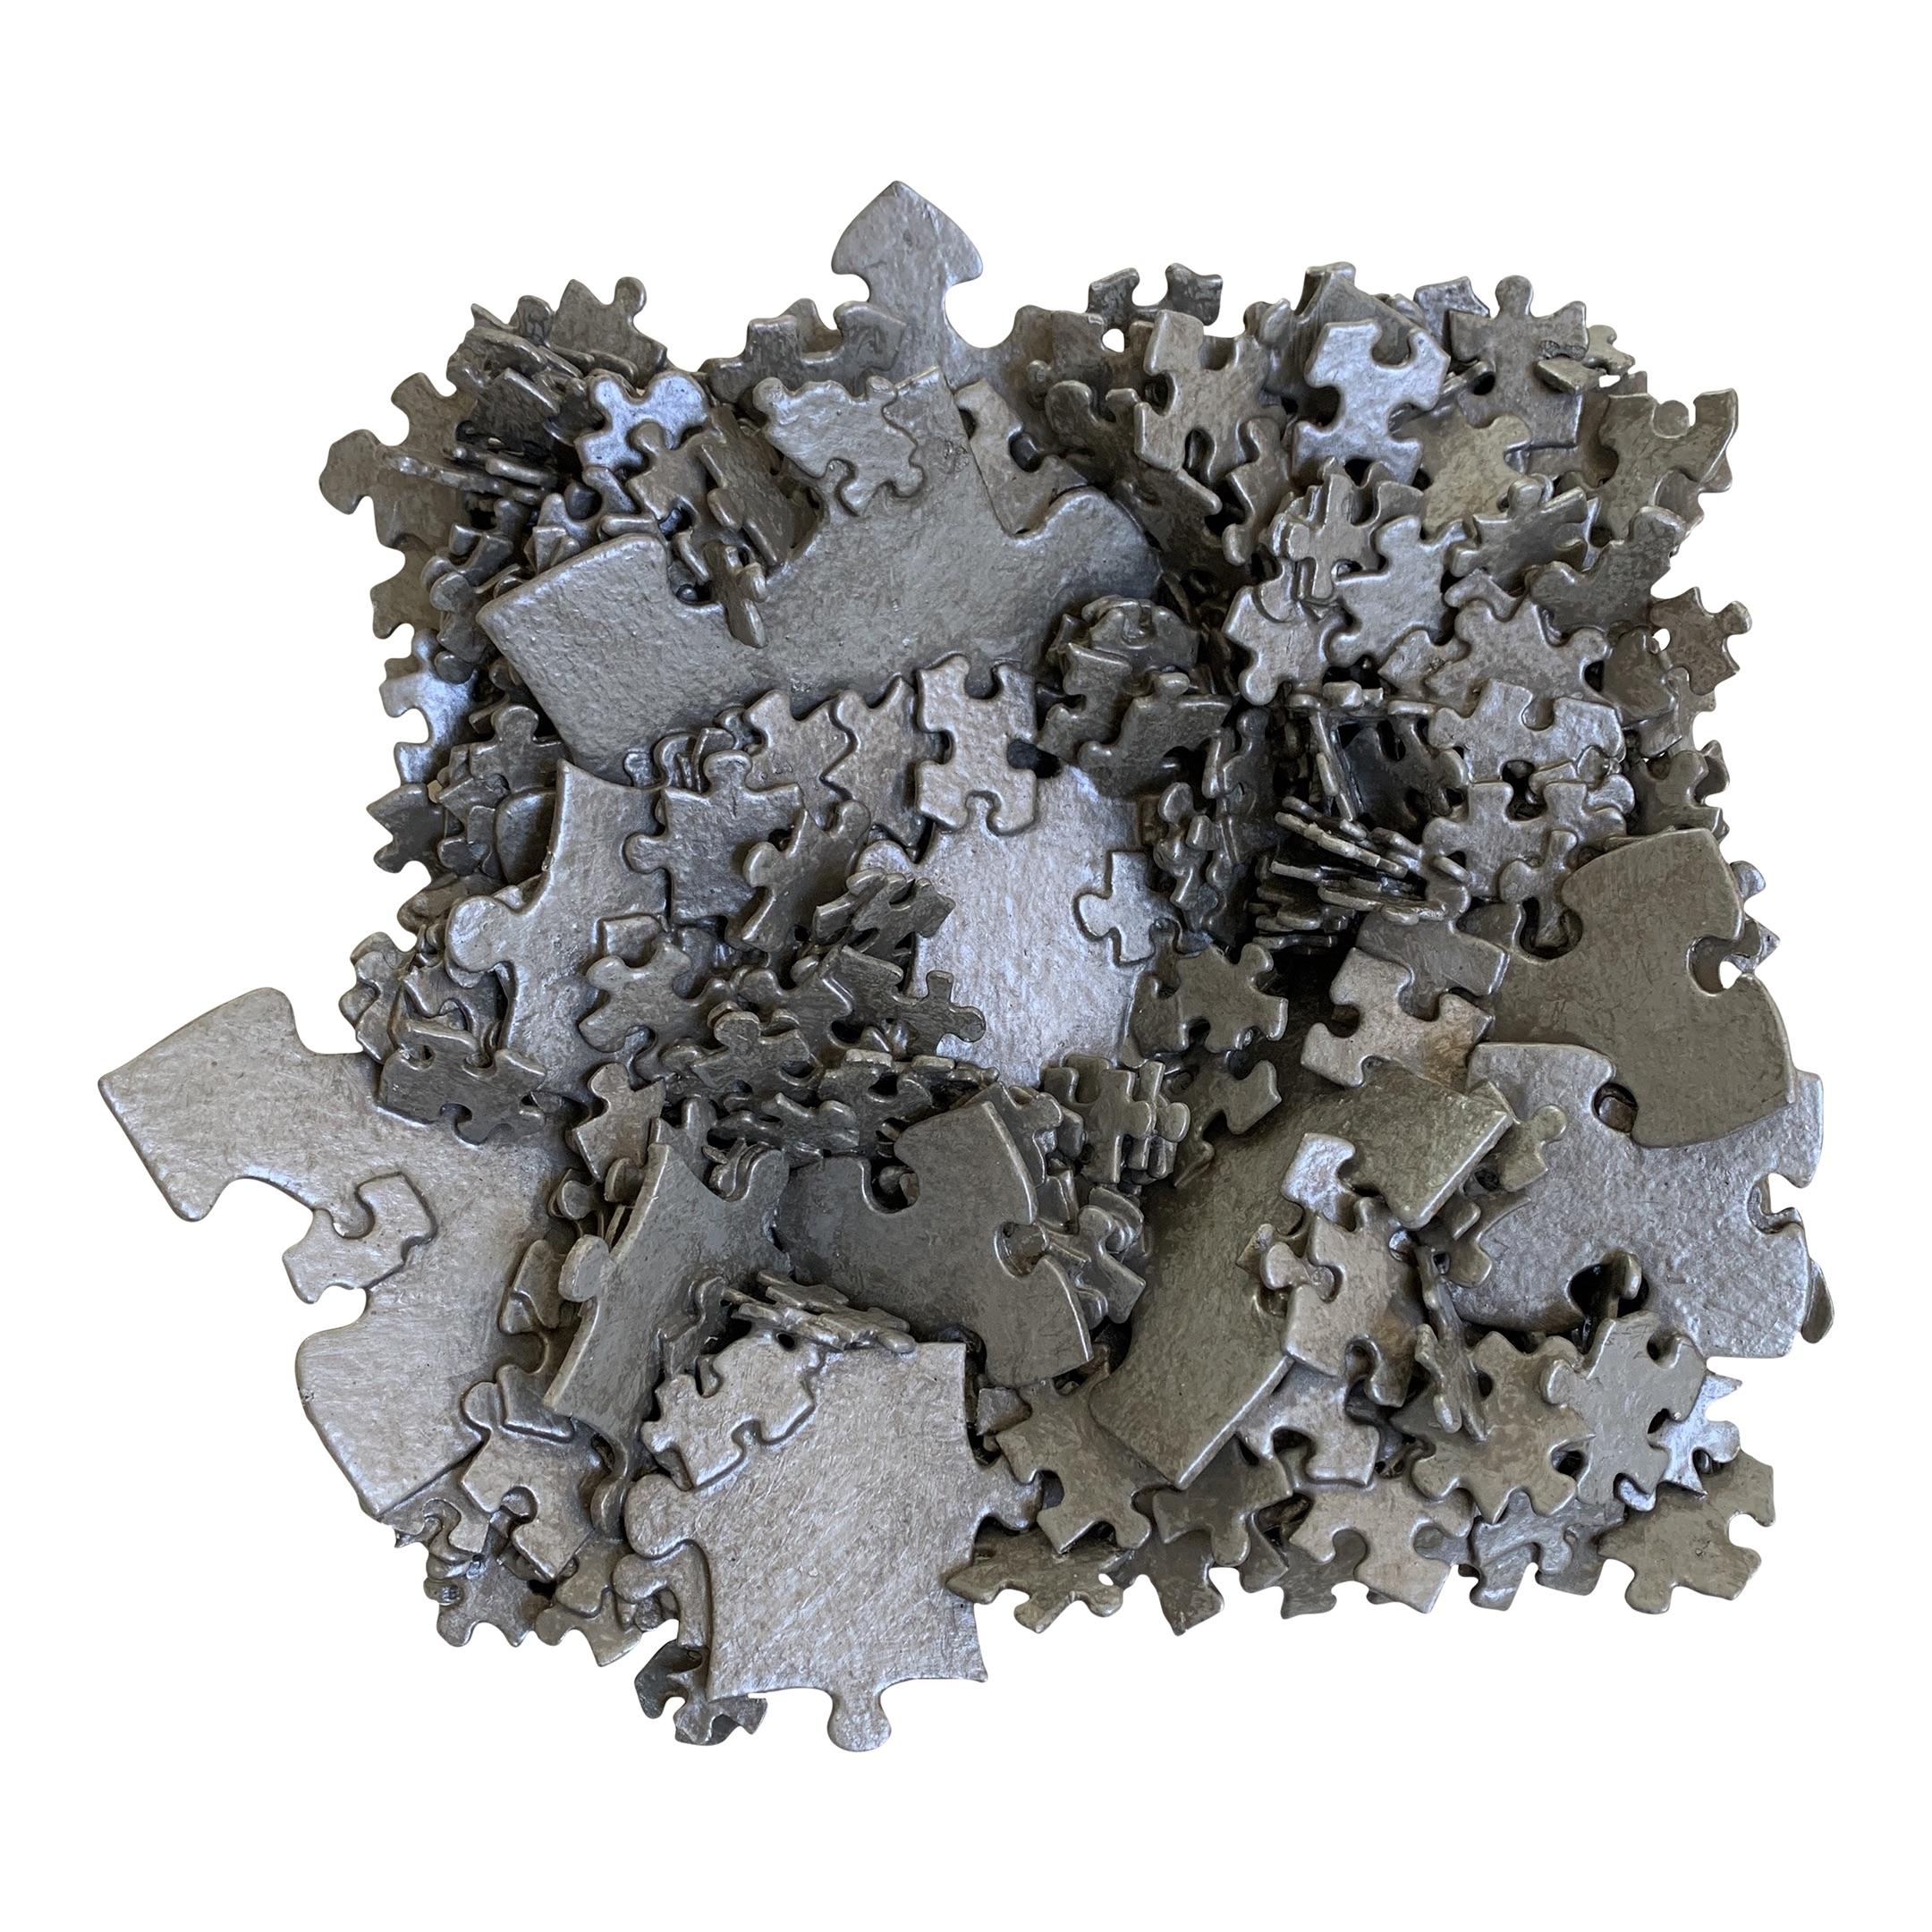 jeffrey wilcox Abstract Sculpture - Silver Nugget Puzzle Sculpture